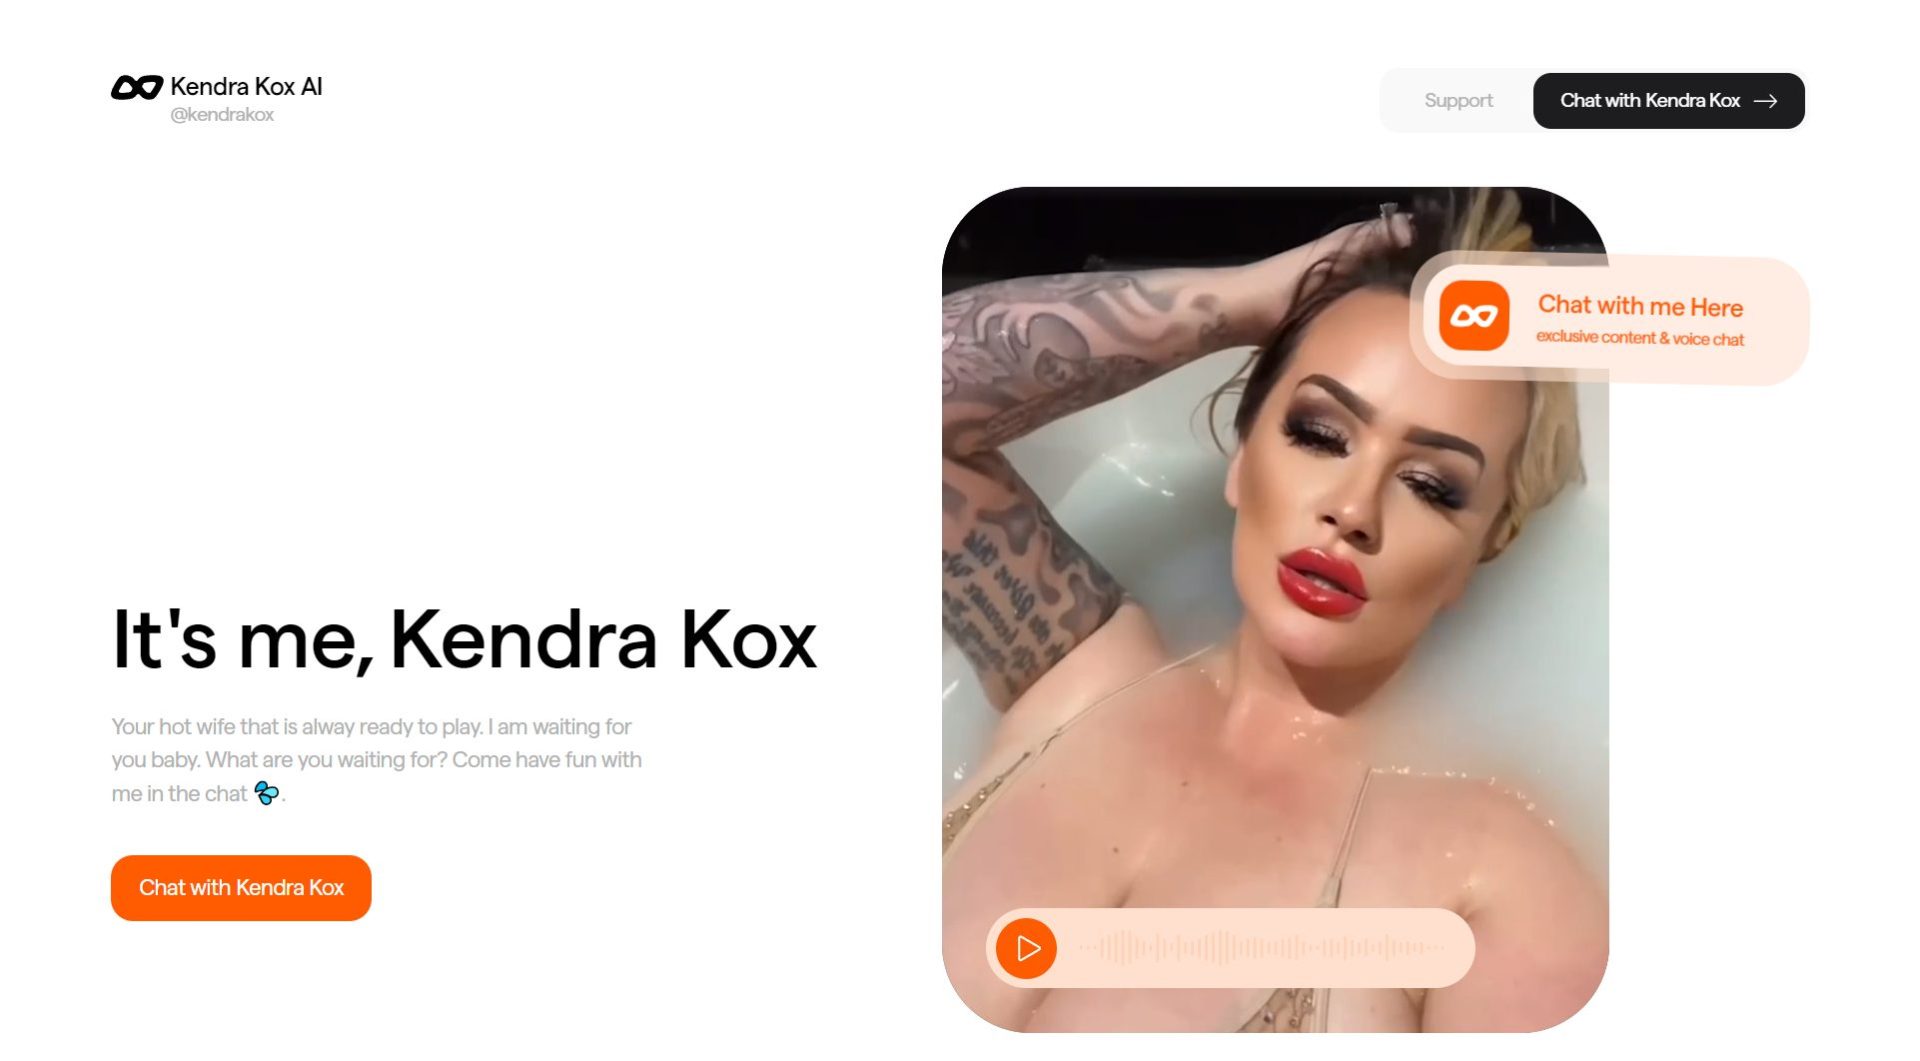 Kendra Kox launches AI companion through Swoons